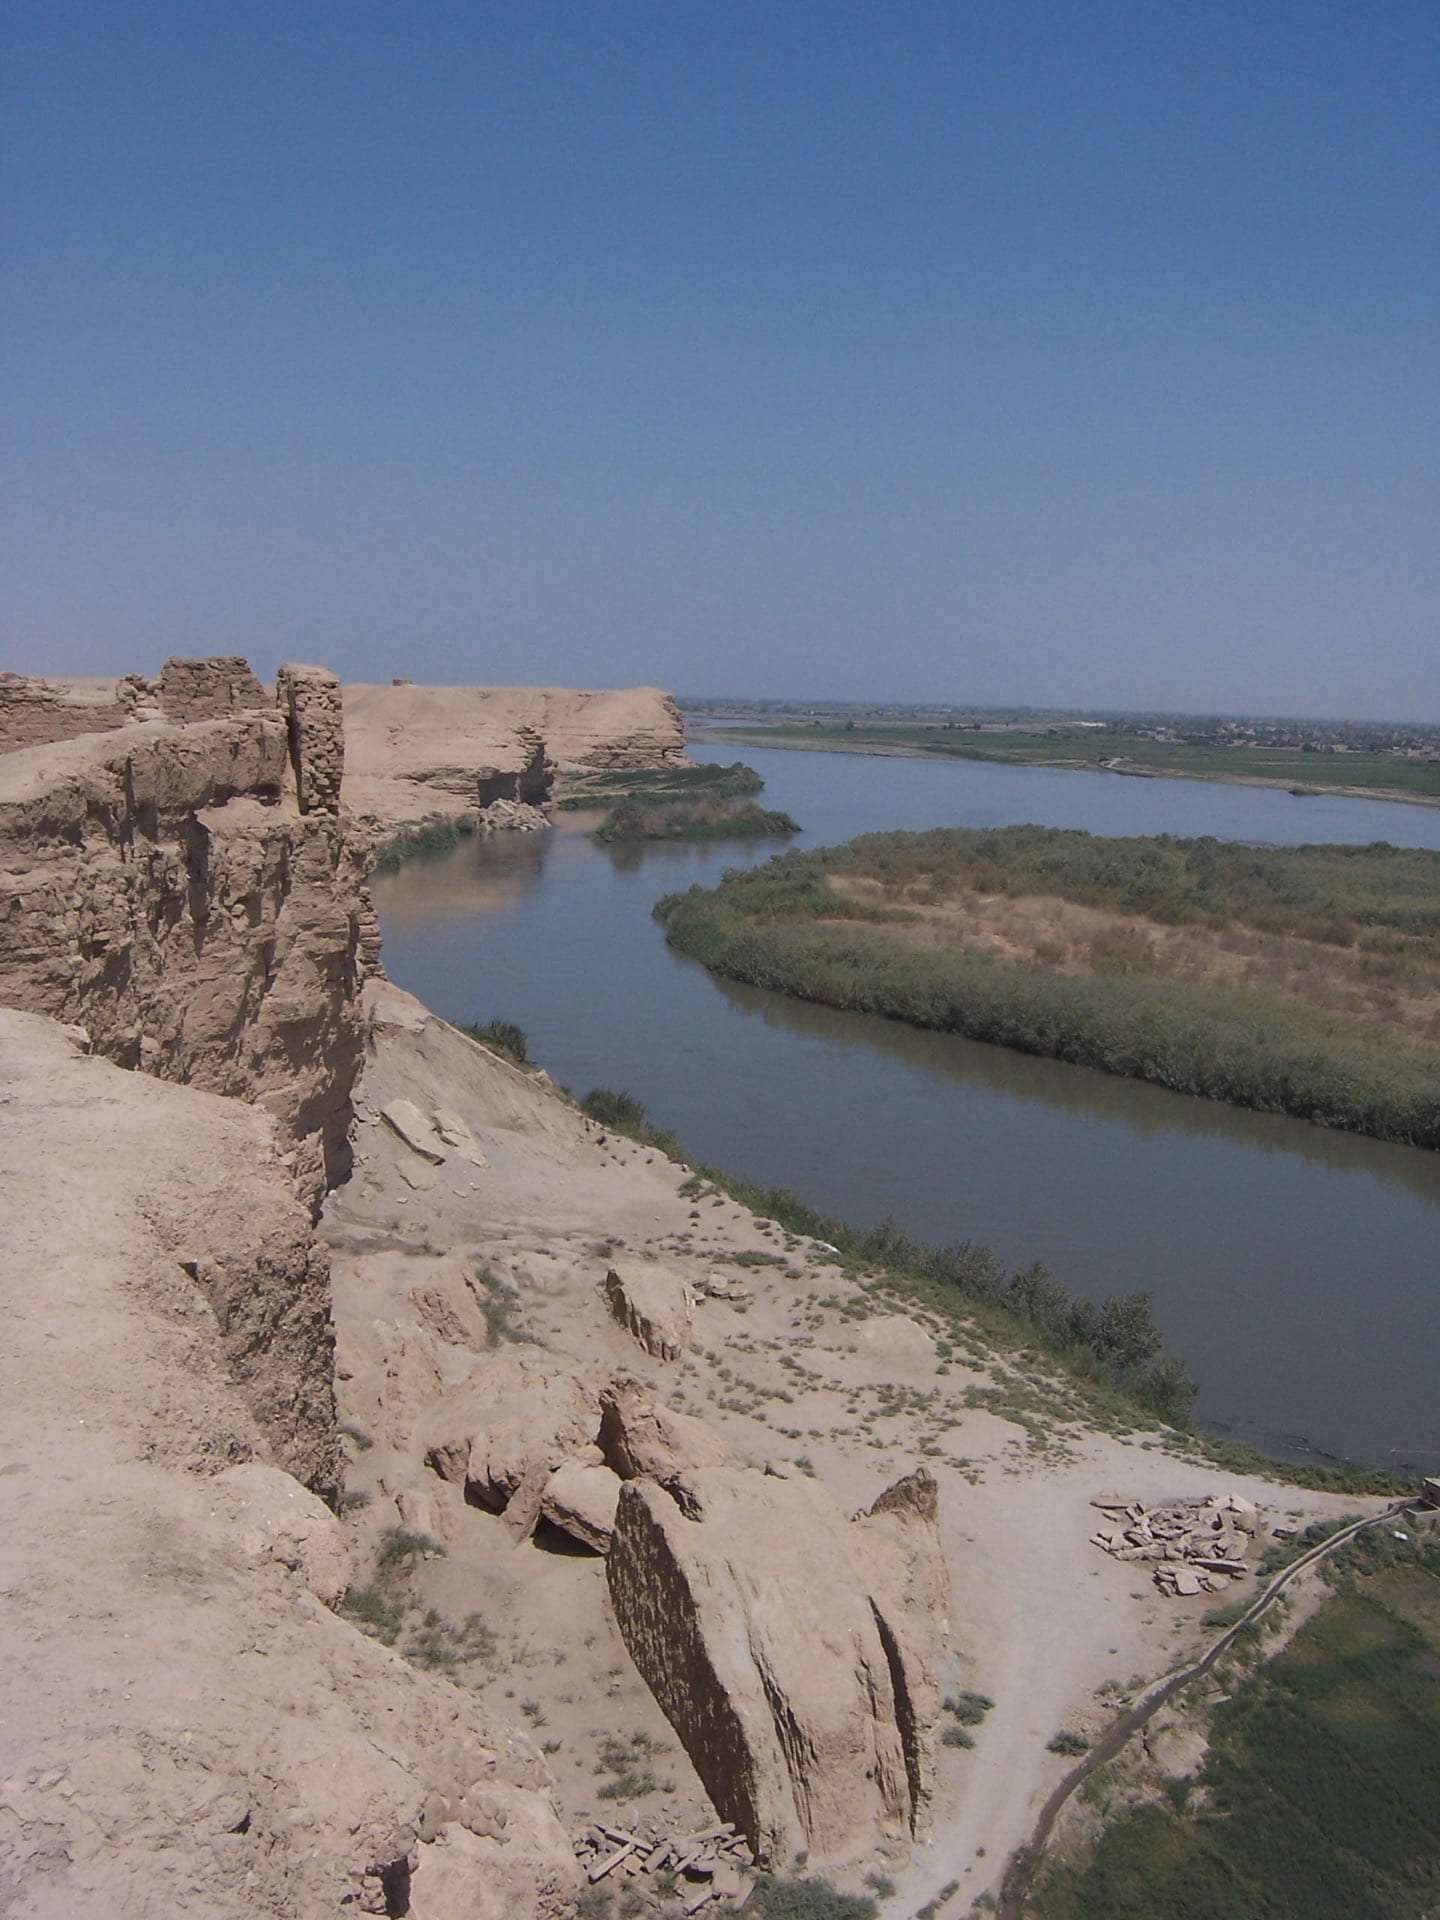 the Euphrates river